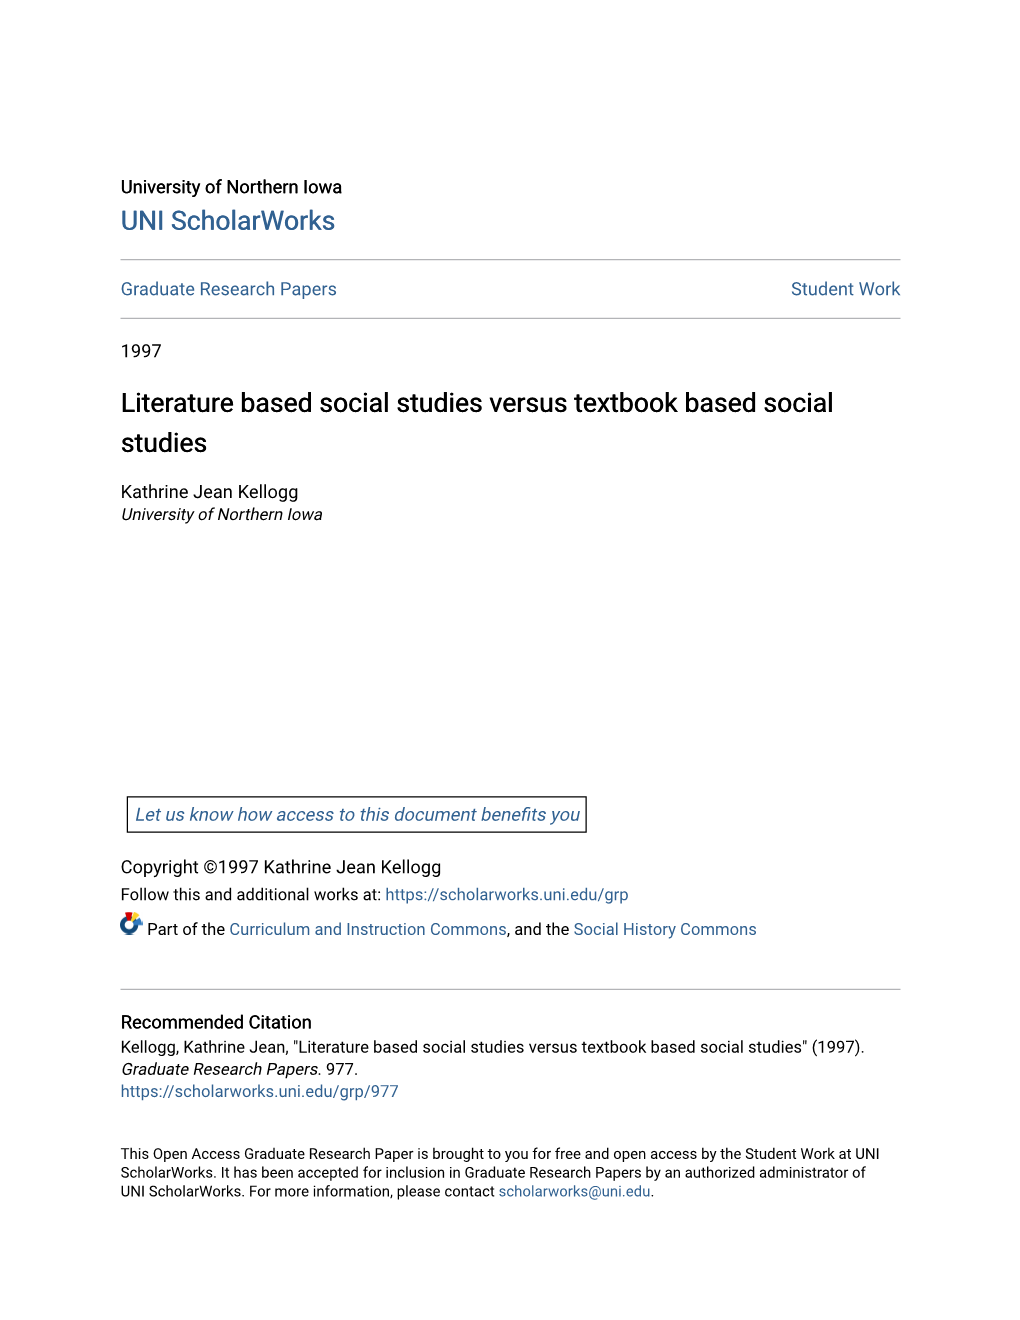 Literature Based Social Studies Versus Textbook Based Social Studies